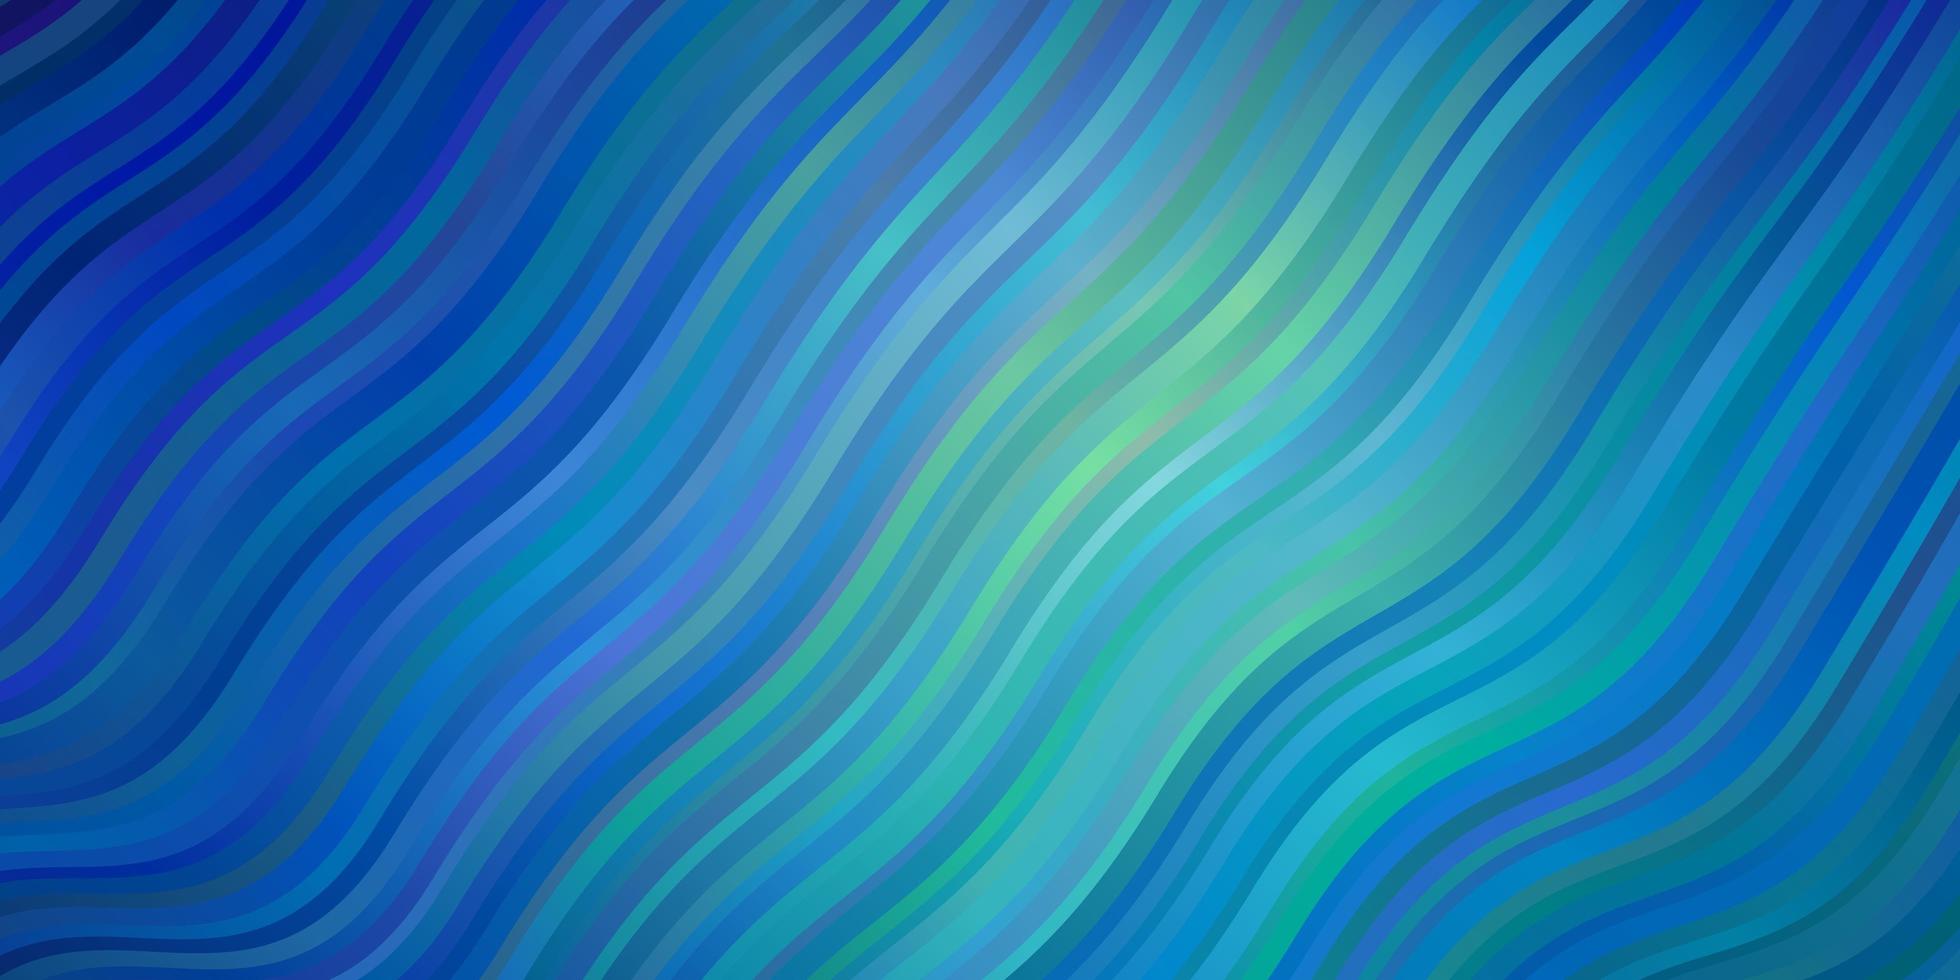 plantilla de vector azul claro con líneas torcidas